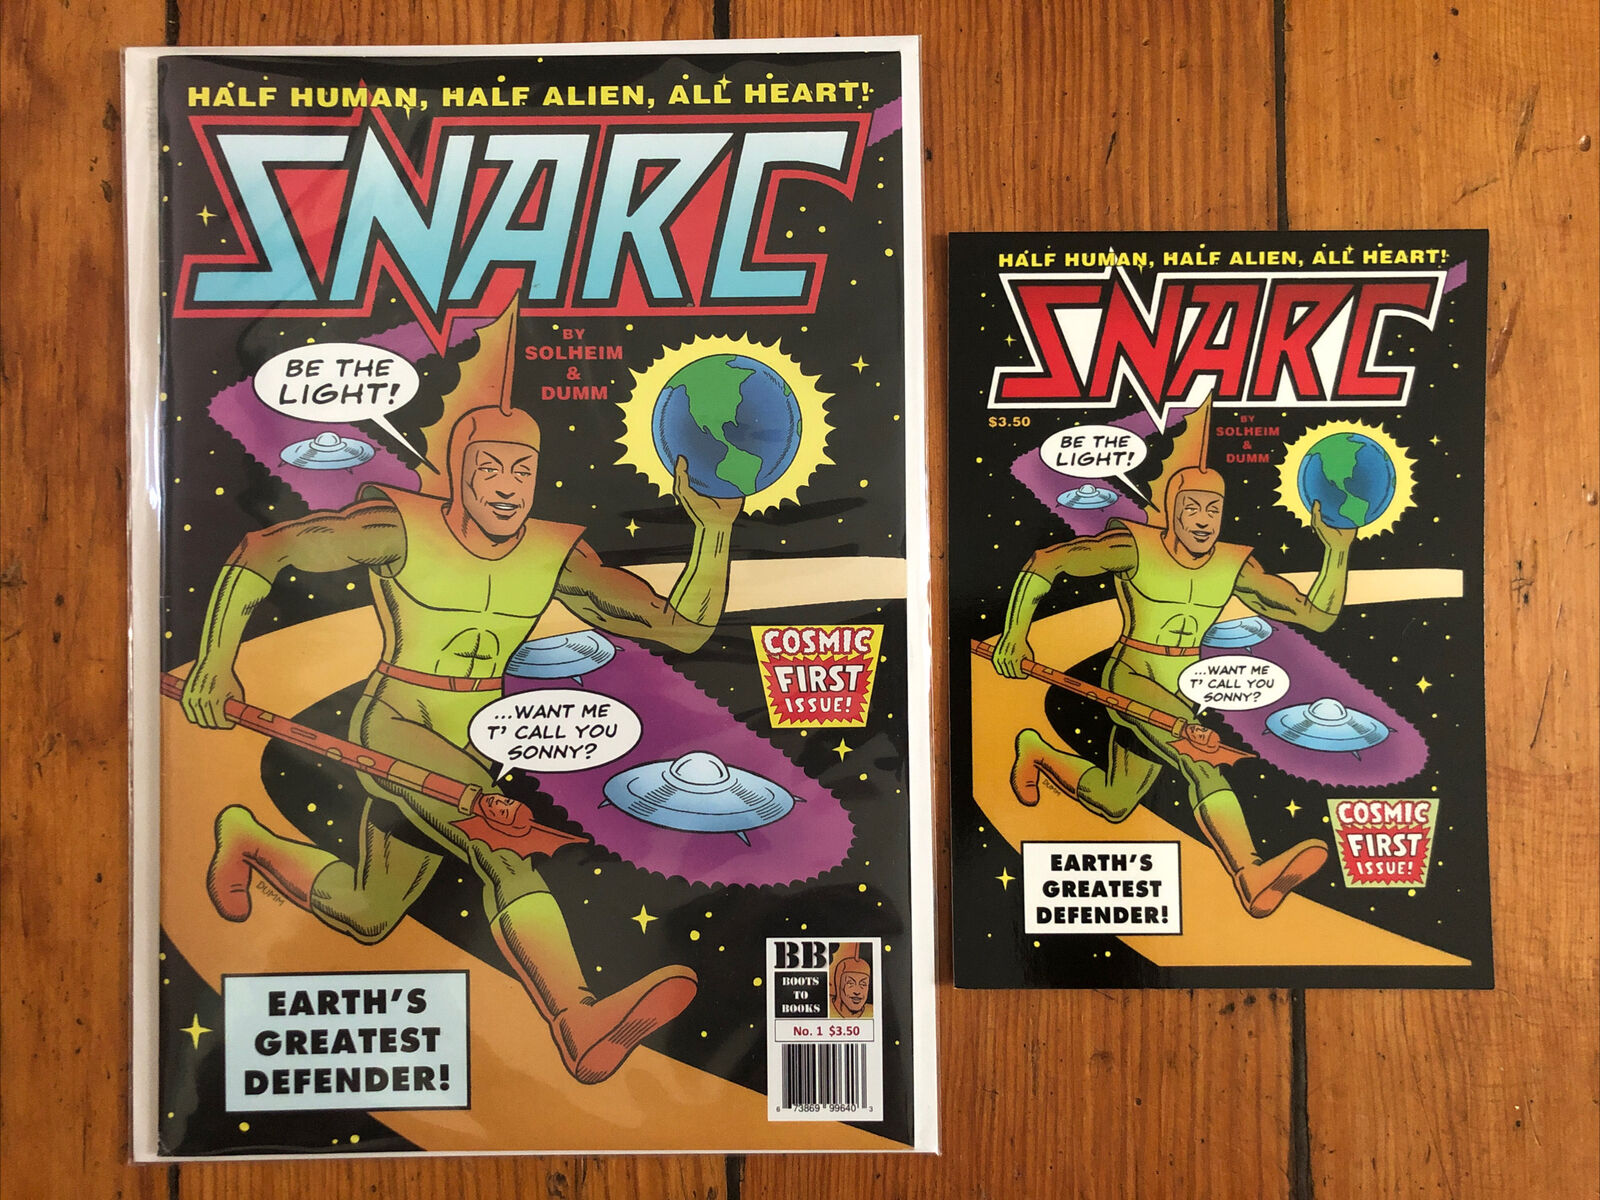 SNARC #1 Bruce Olav Solheim, Gary Dumm (2019 Boots To Books) Alien Indie Comic